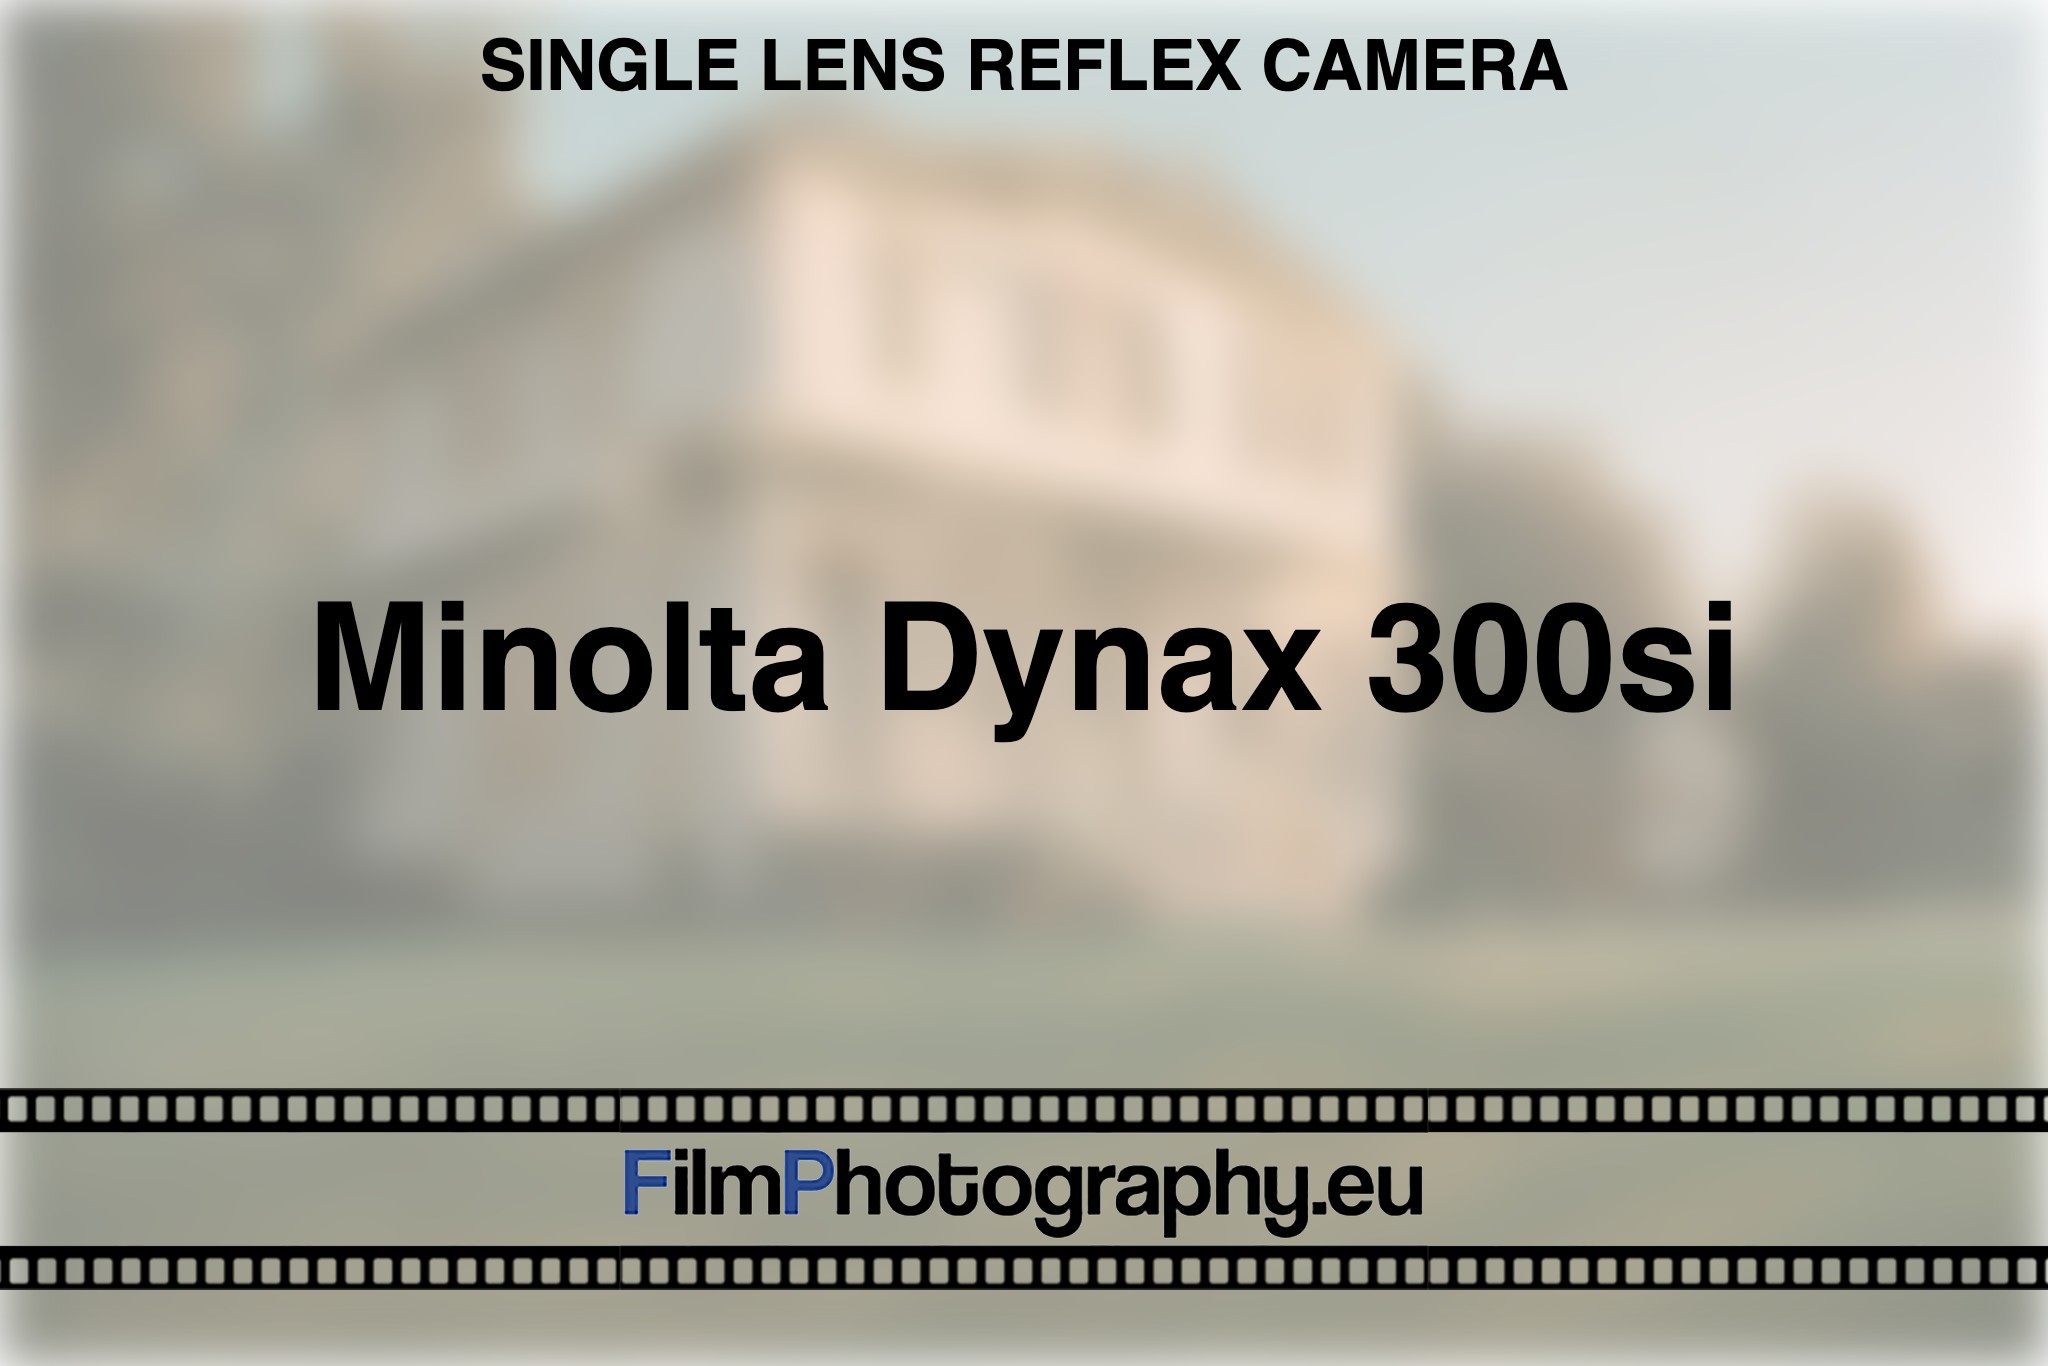 minolta-dynax-300si-single-lens-reflex-camera-bnv